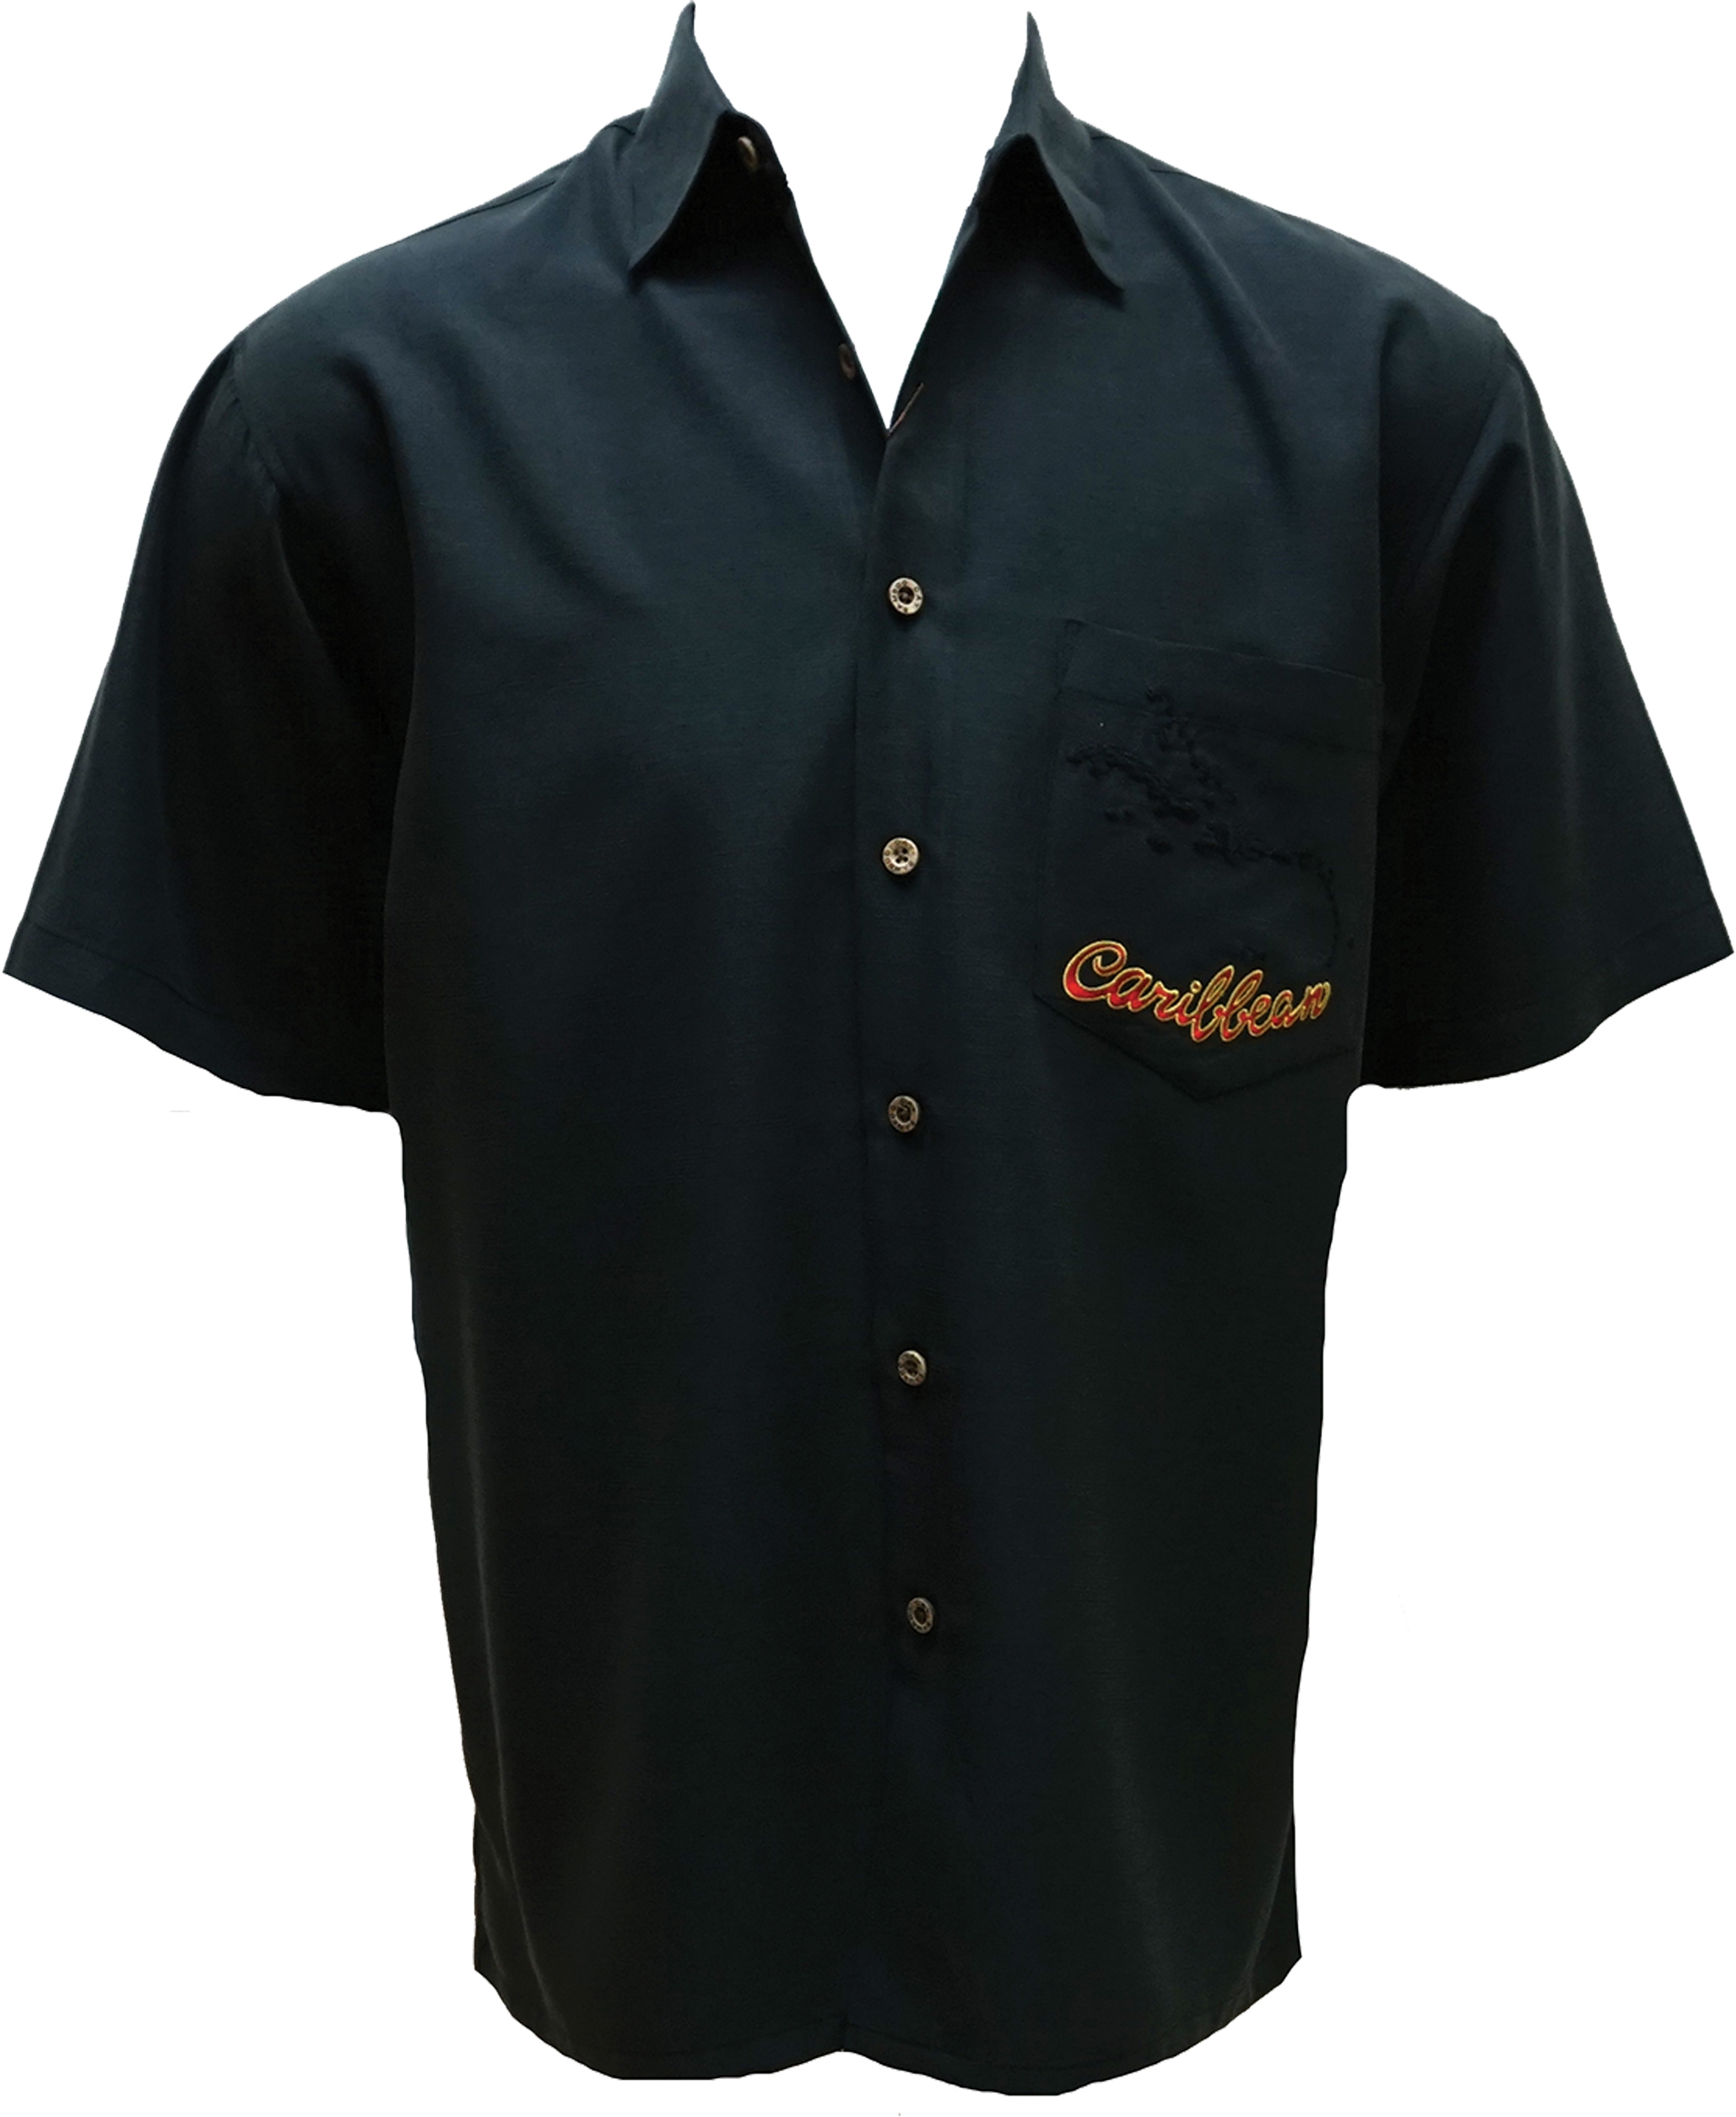 Caribbean Embroidered Navy Short Sleeve Woven Shirt